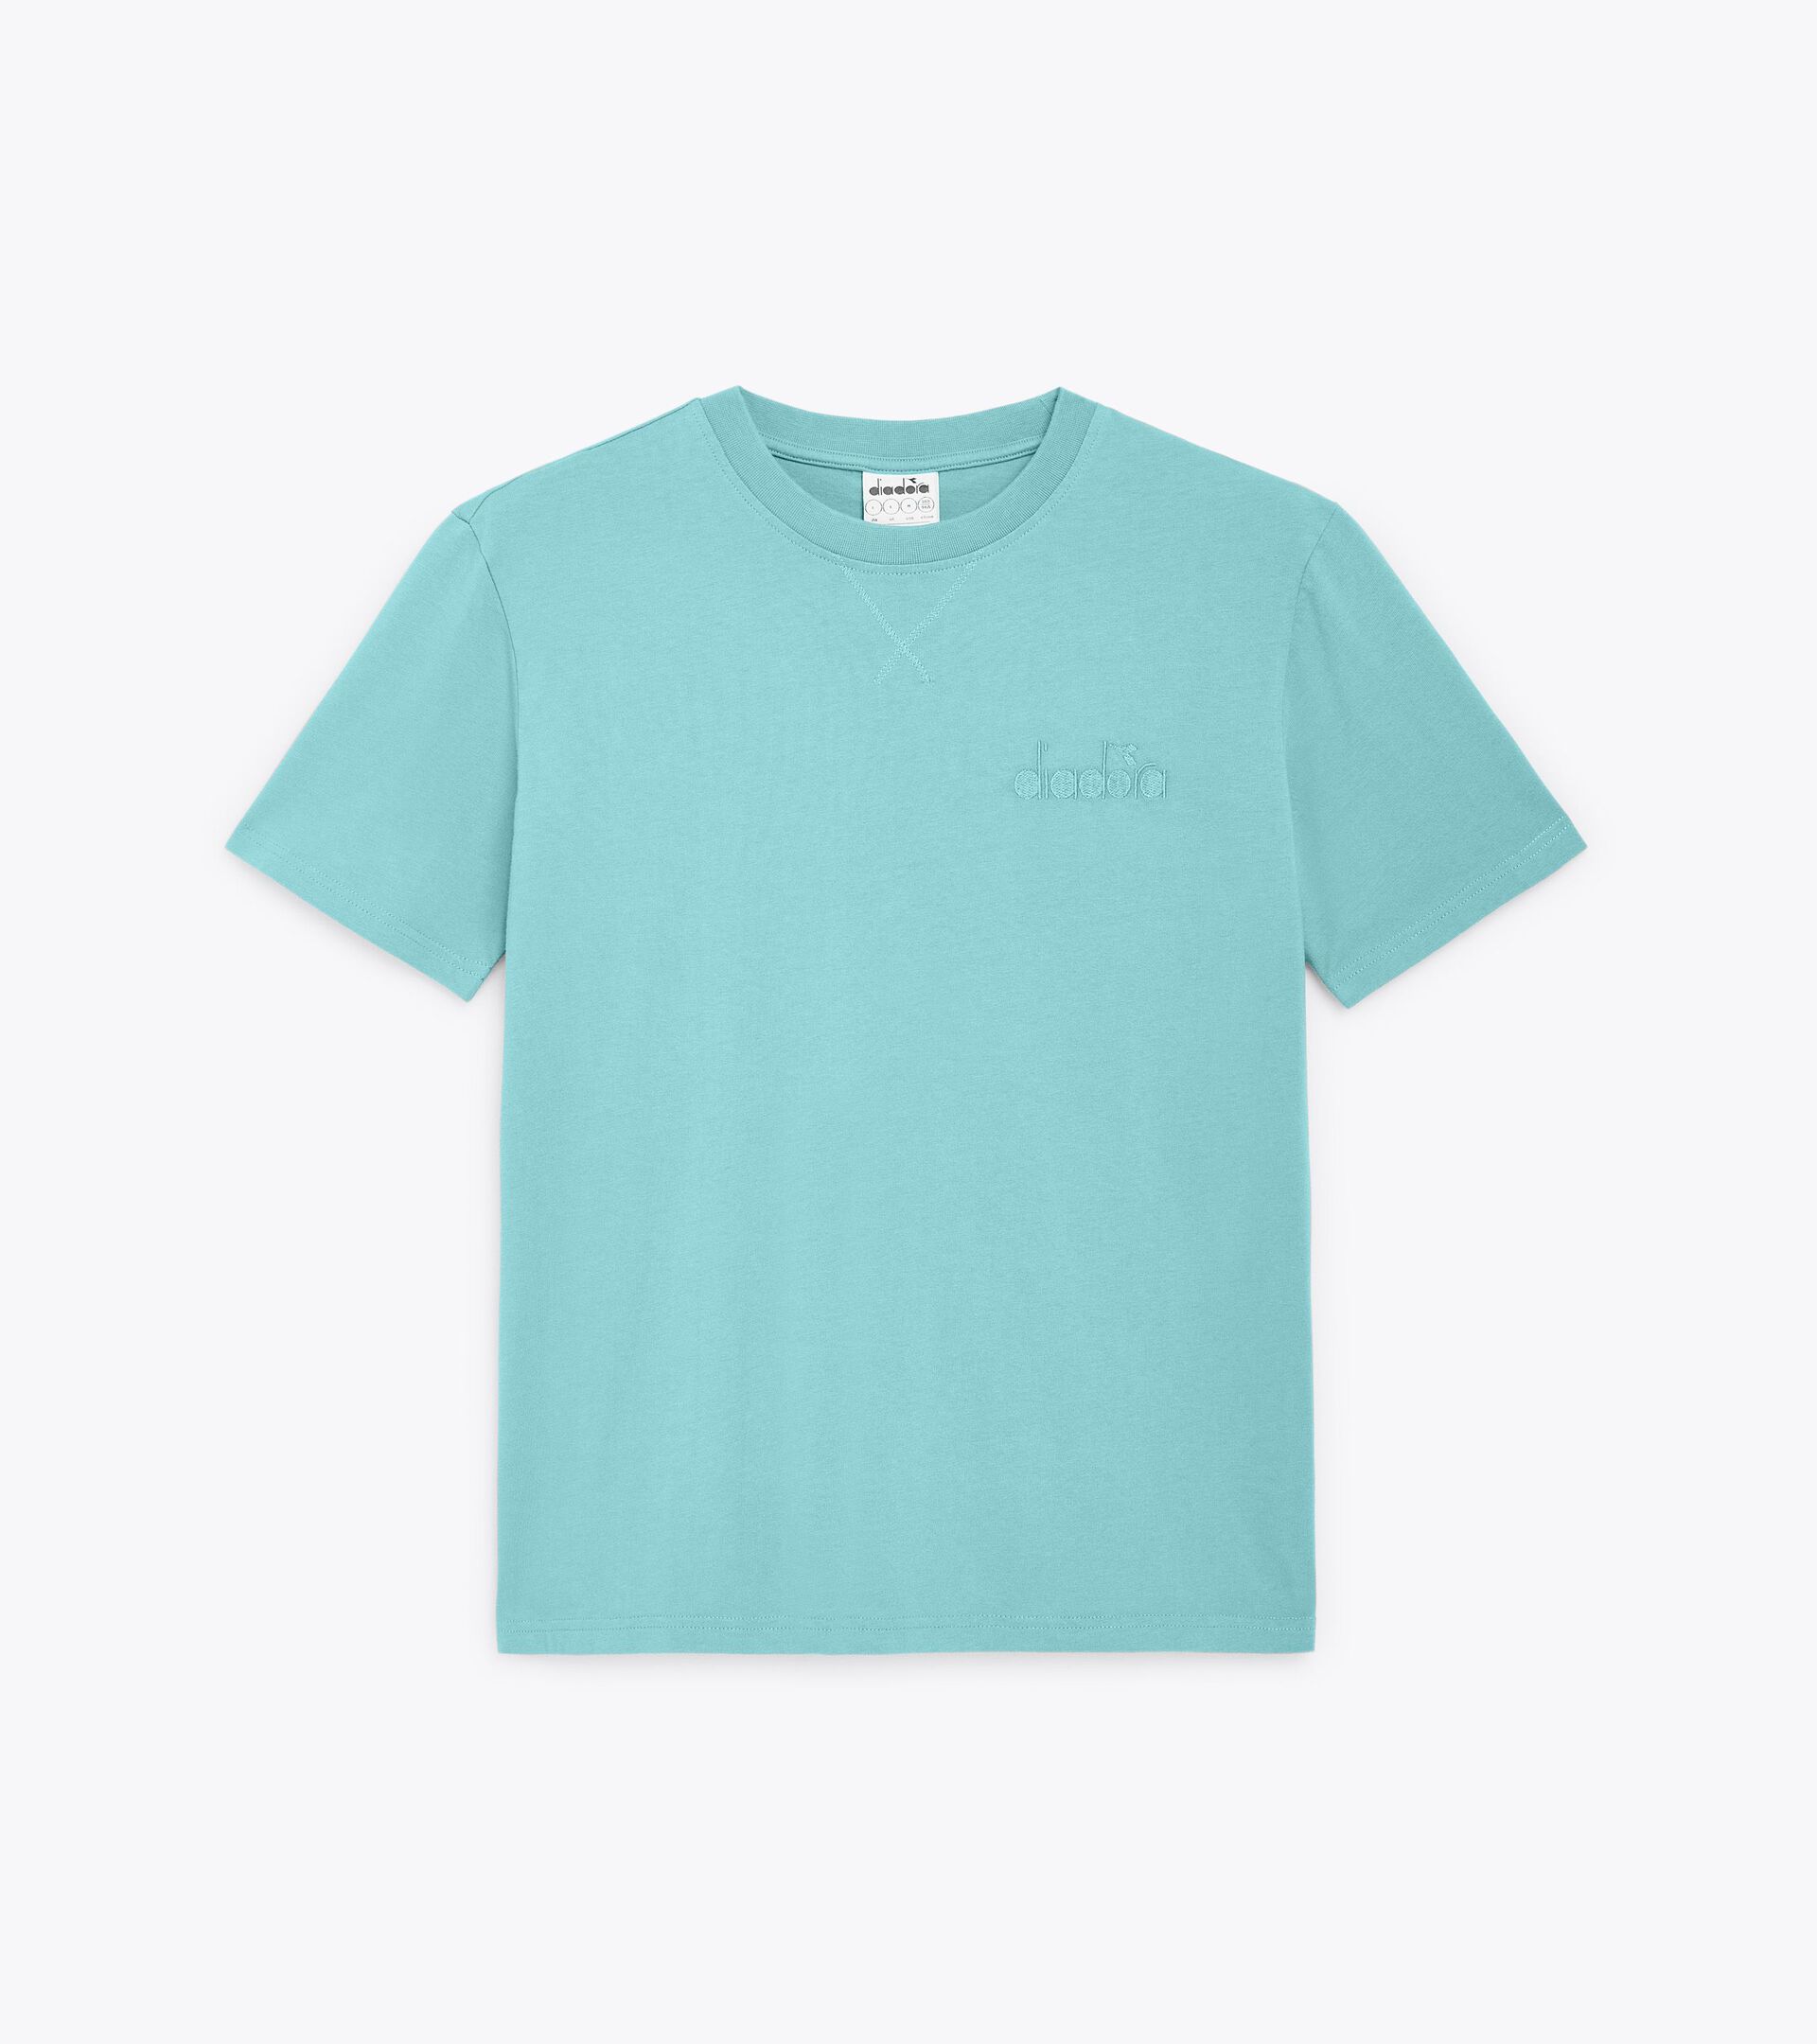 T-shirt - Gender Neutral T-SHIRT SS ATHL. LOGO TURQUOISE PASTEL - Diadora